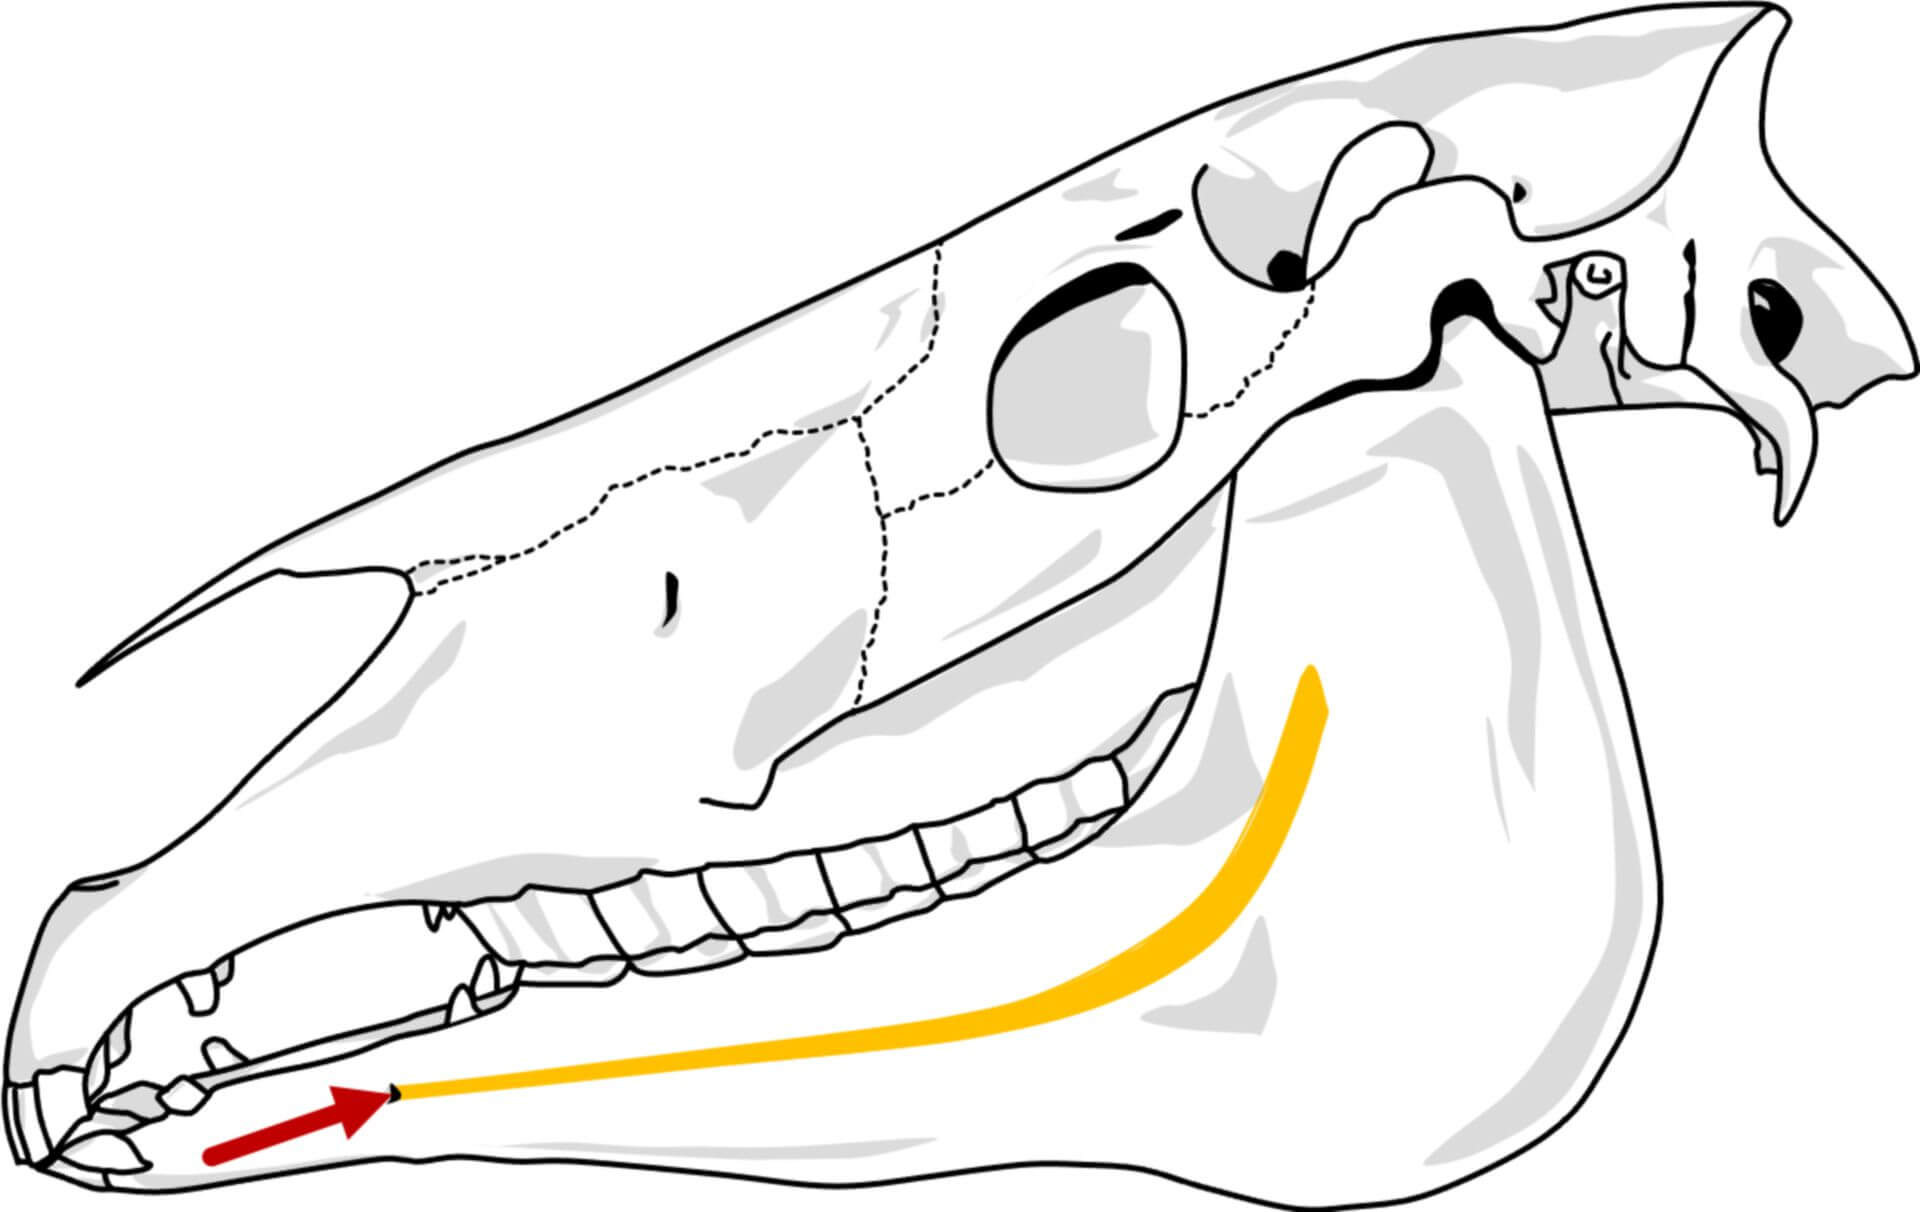 Foramen-mentale-Anästhesie (© Patrick Messner)